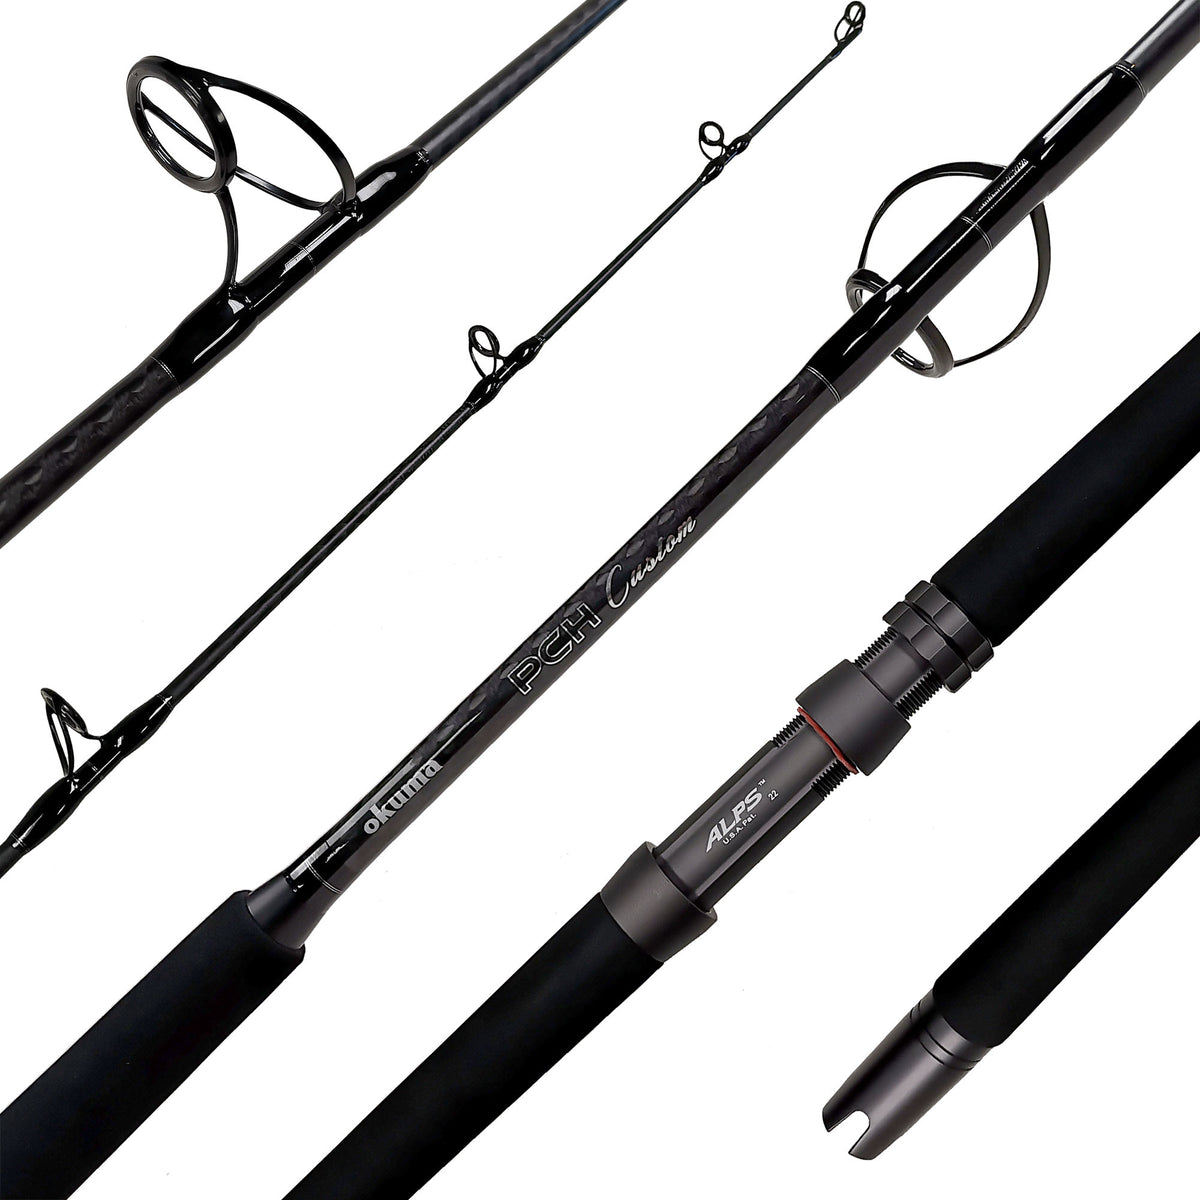 Okuma Fishing Rods - Okuma Fishing Poles